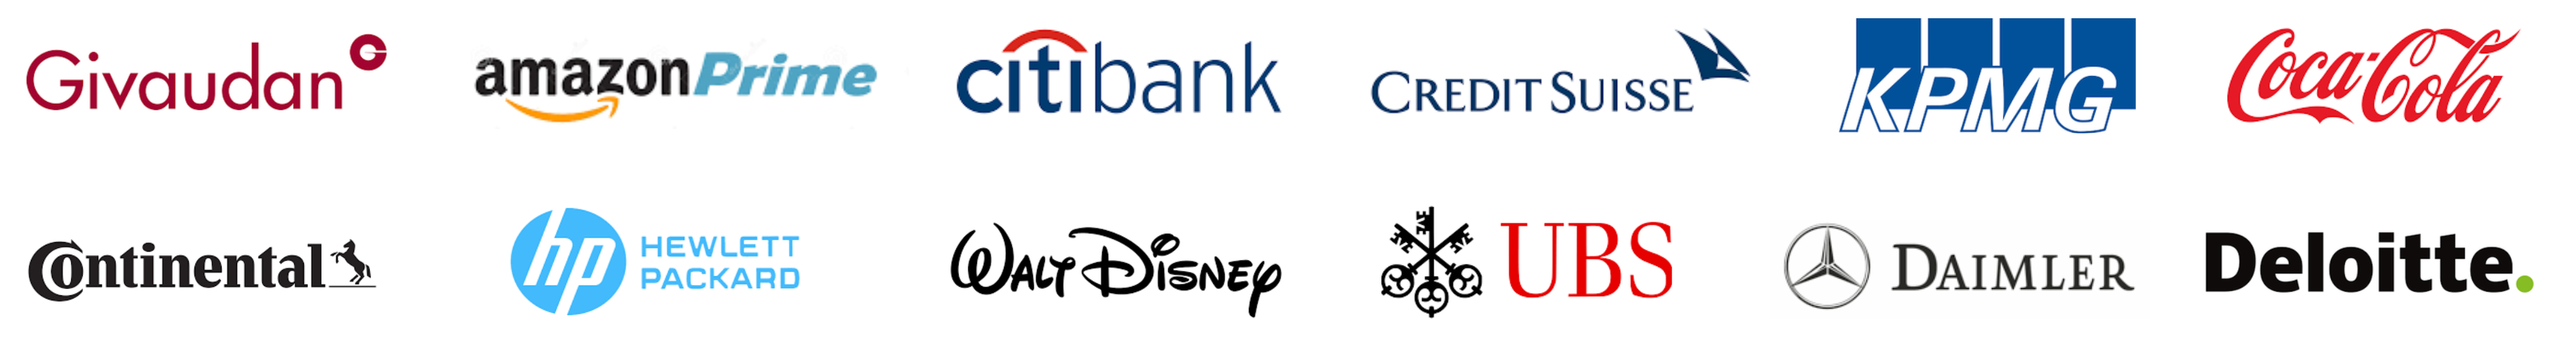 IMAA_Client Logos